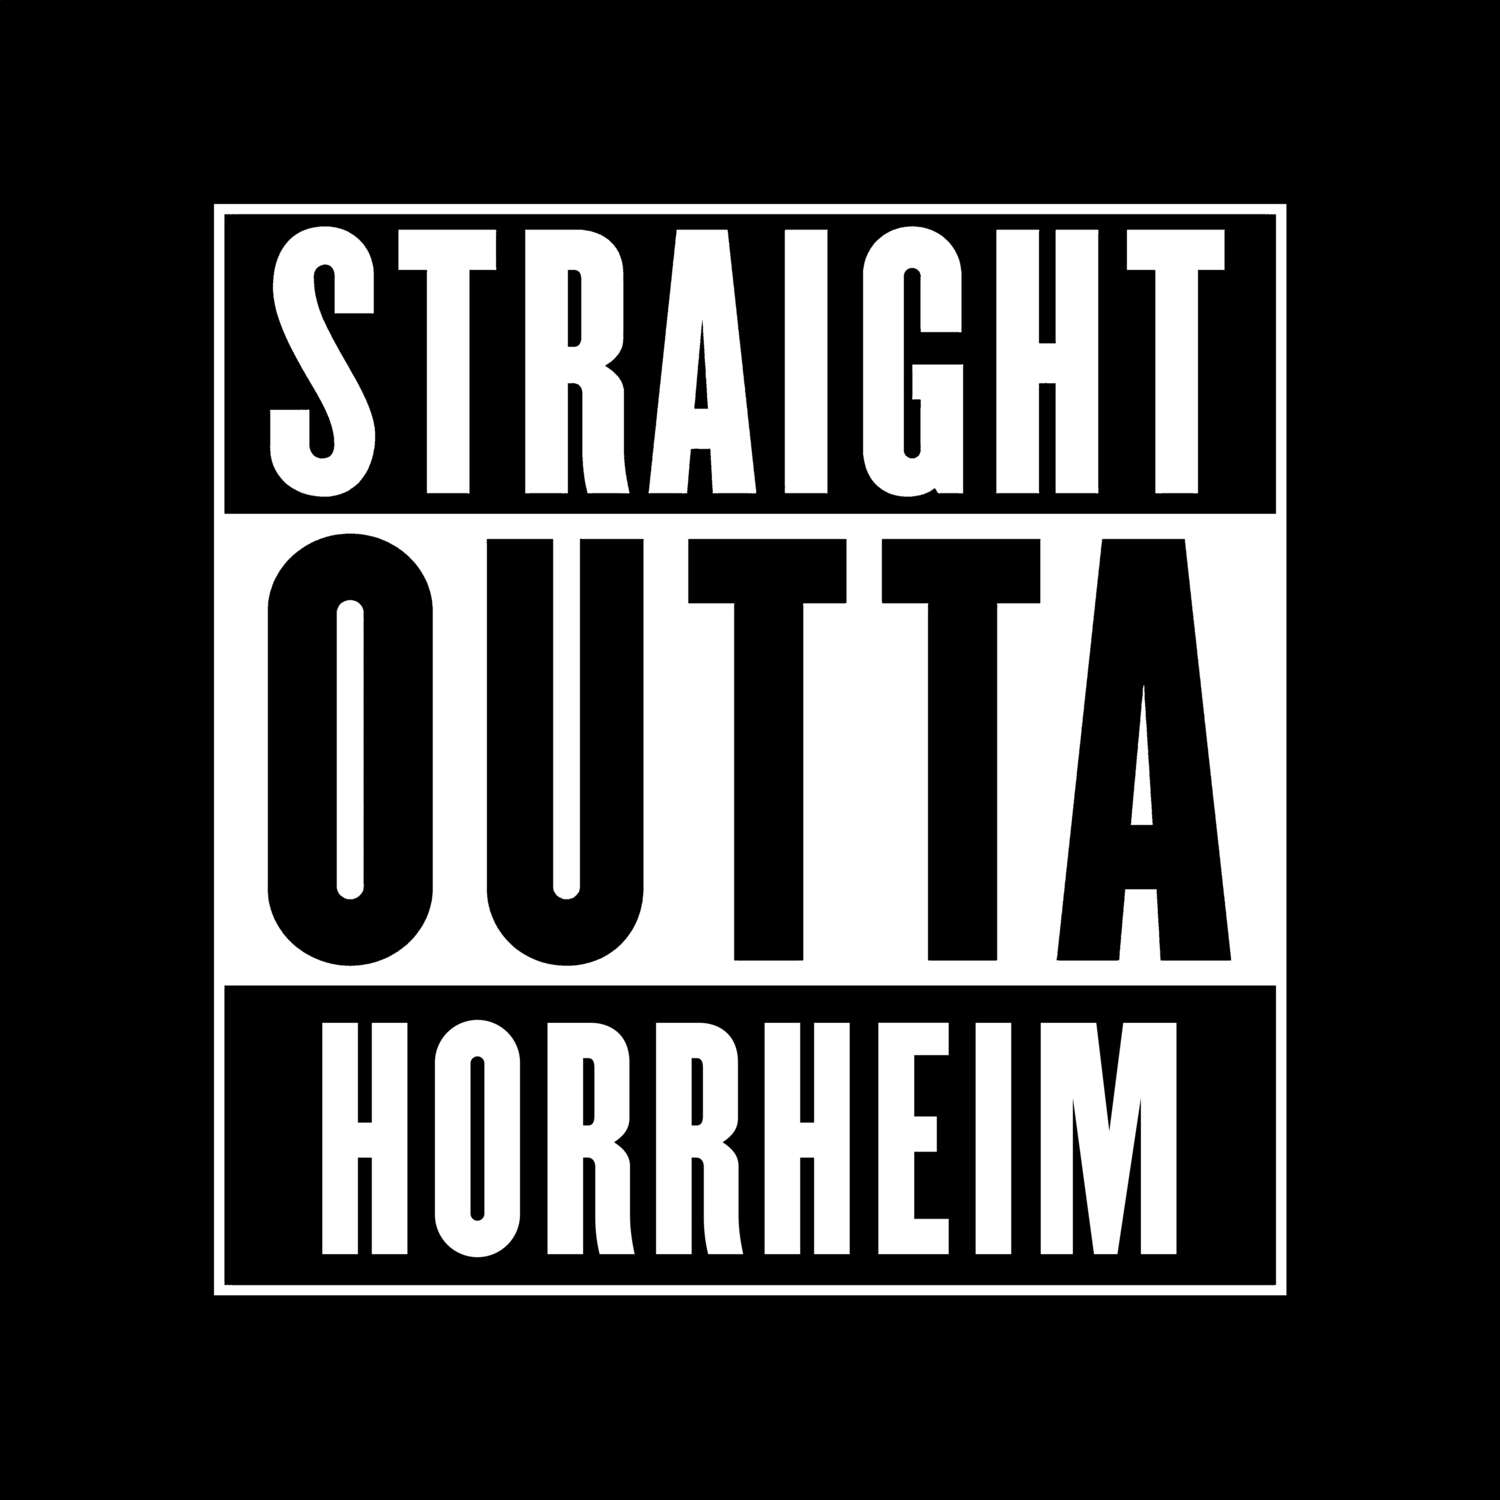 Horrheim T-Shirt »Straight Outta«